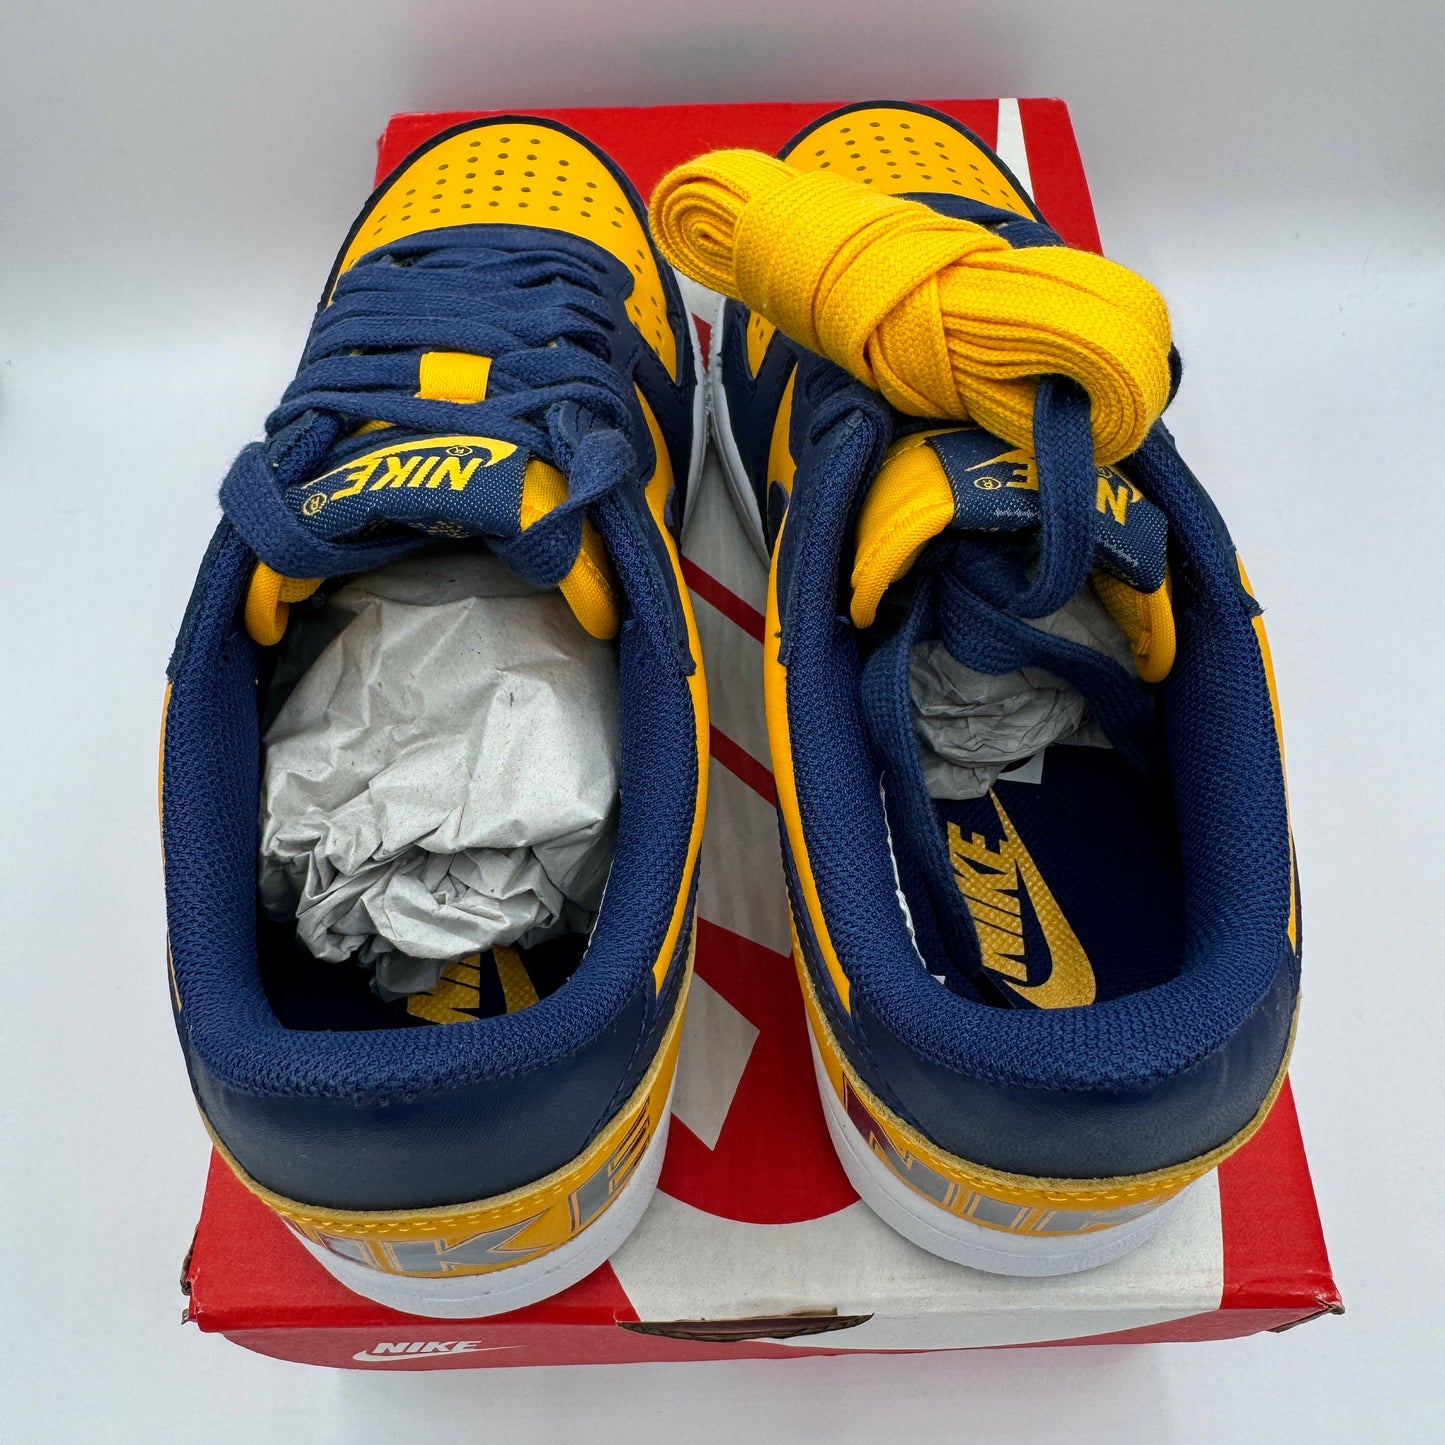 Nike Terminator Low in University Gold / Navy Blue “ Michigan “ Unisex Shoes